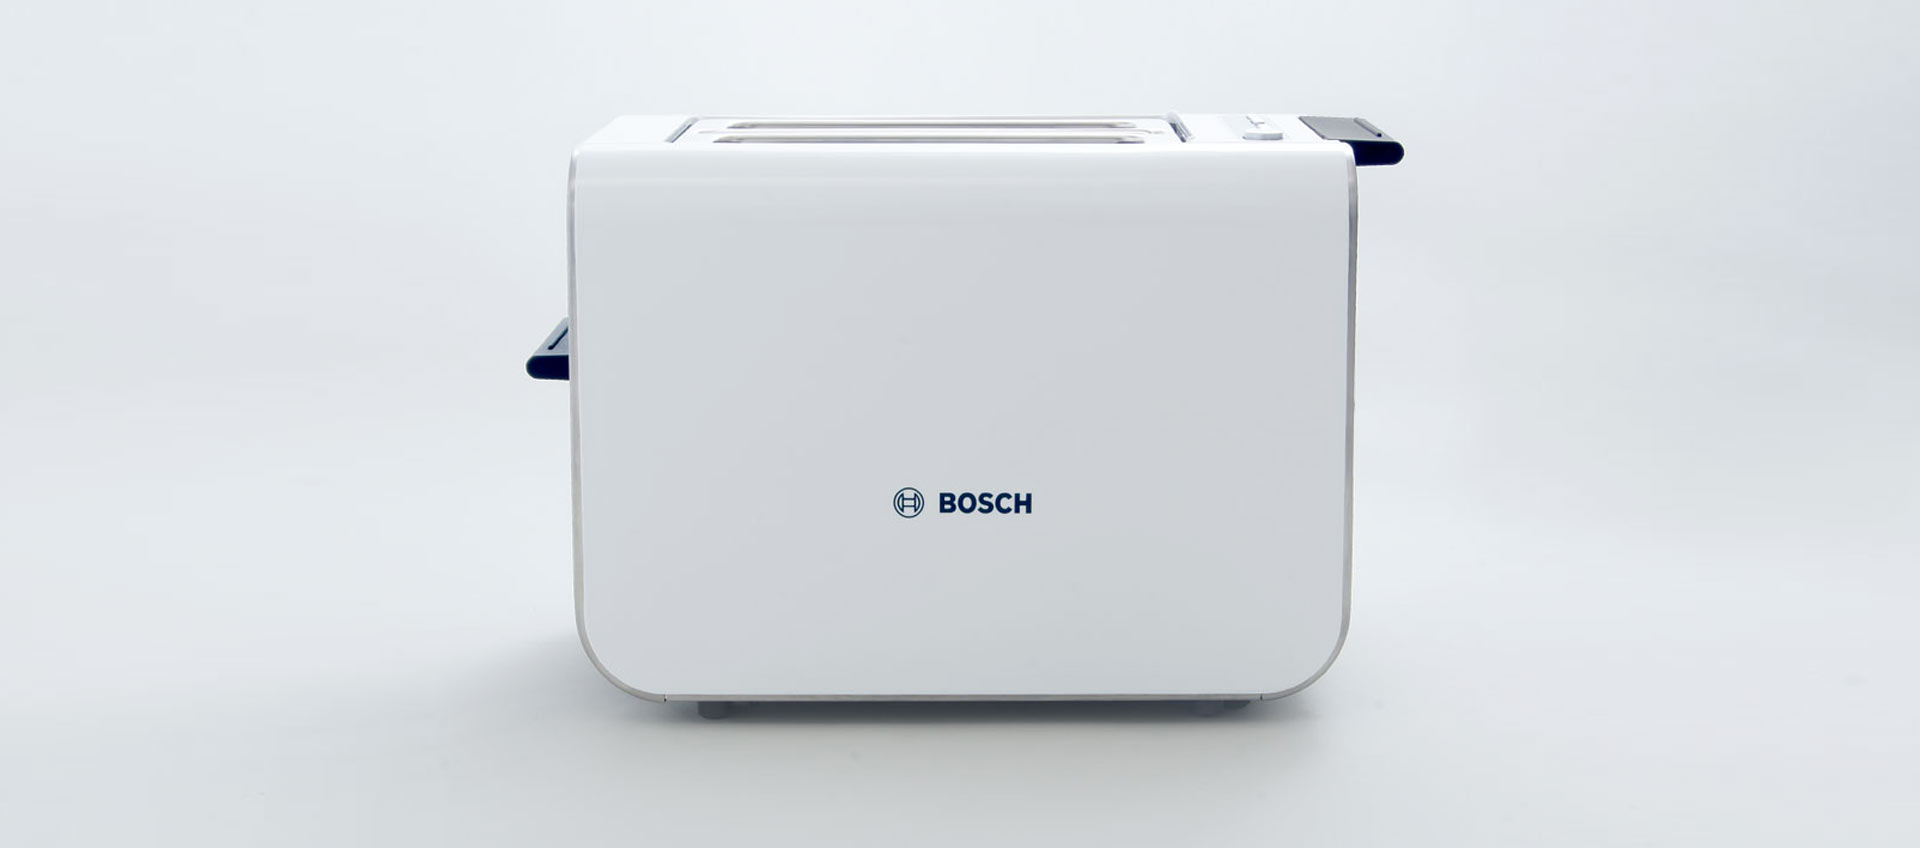 Industrial Designers daniels + erdwiens Toaster TAT-8 for Bosch Siemens Hausgeräte